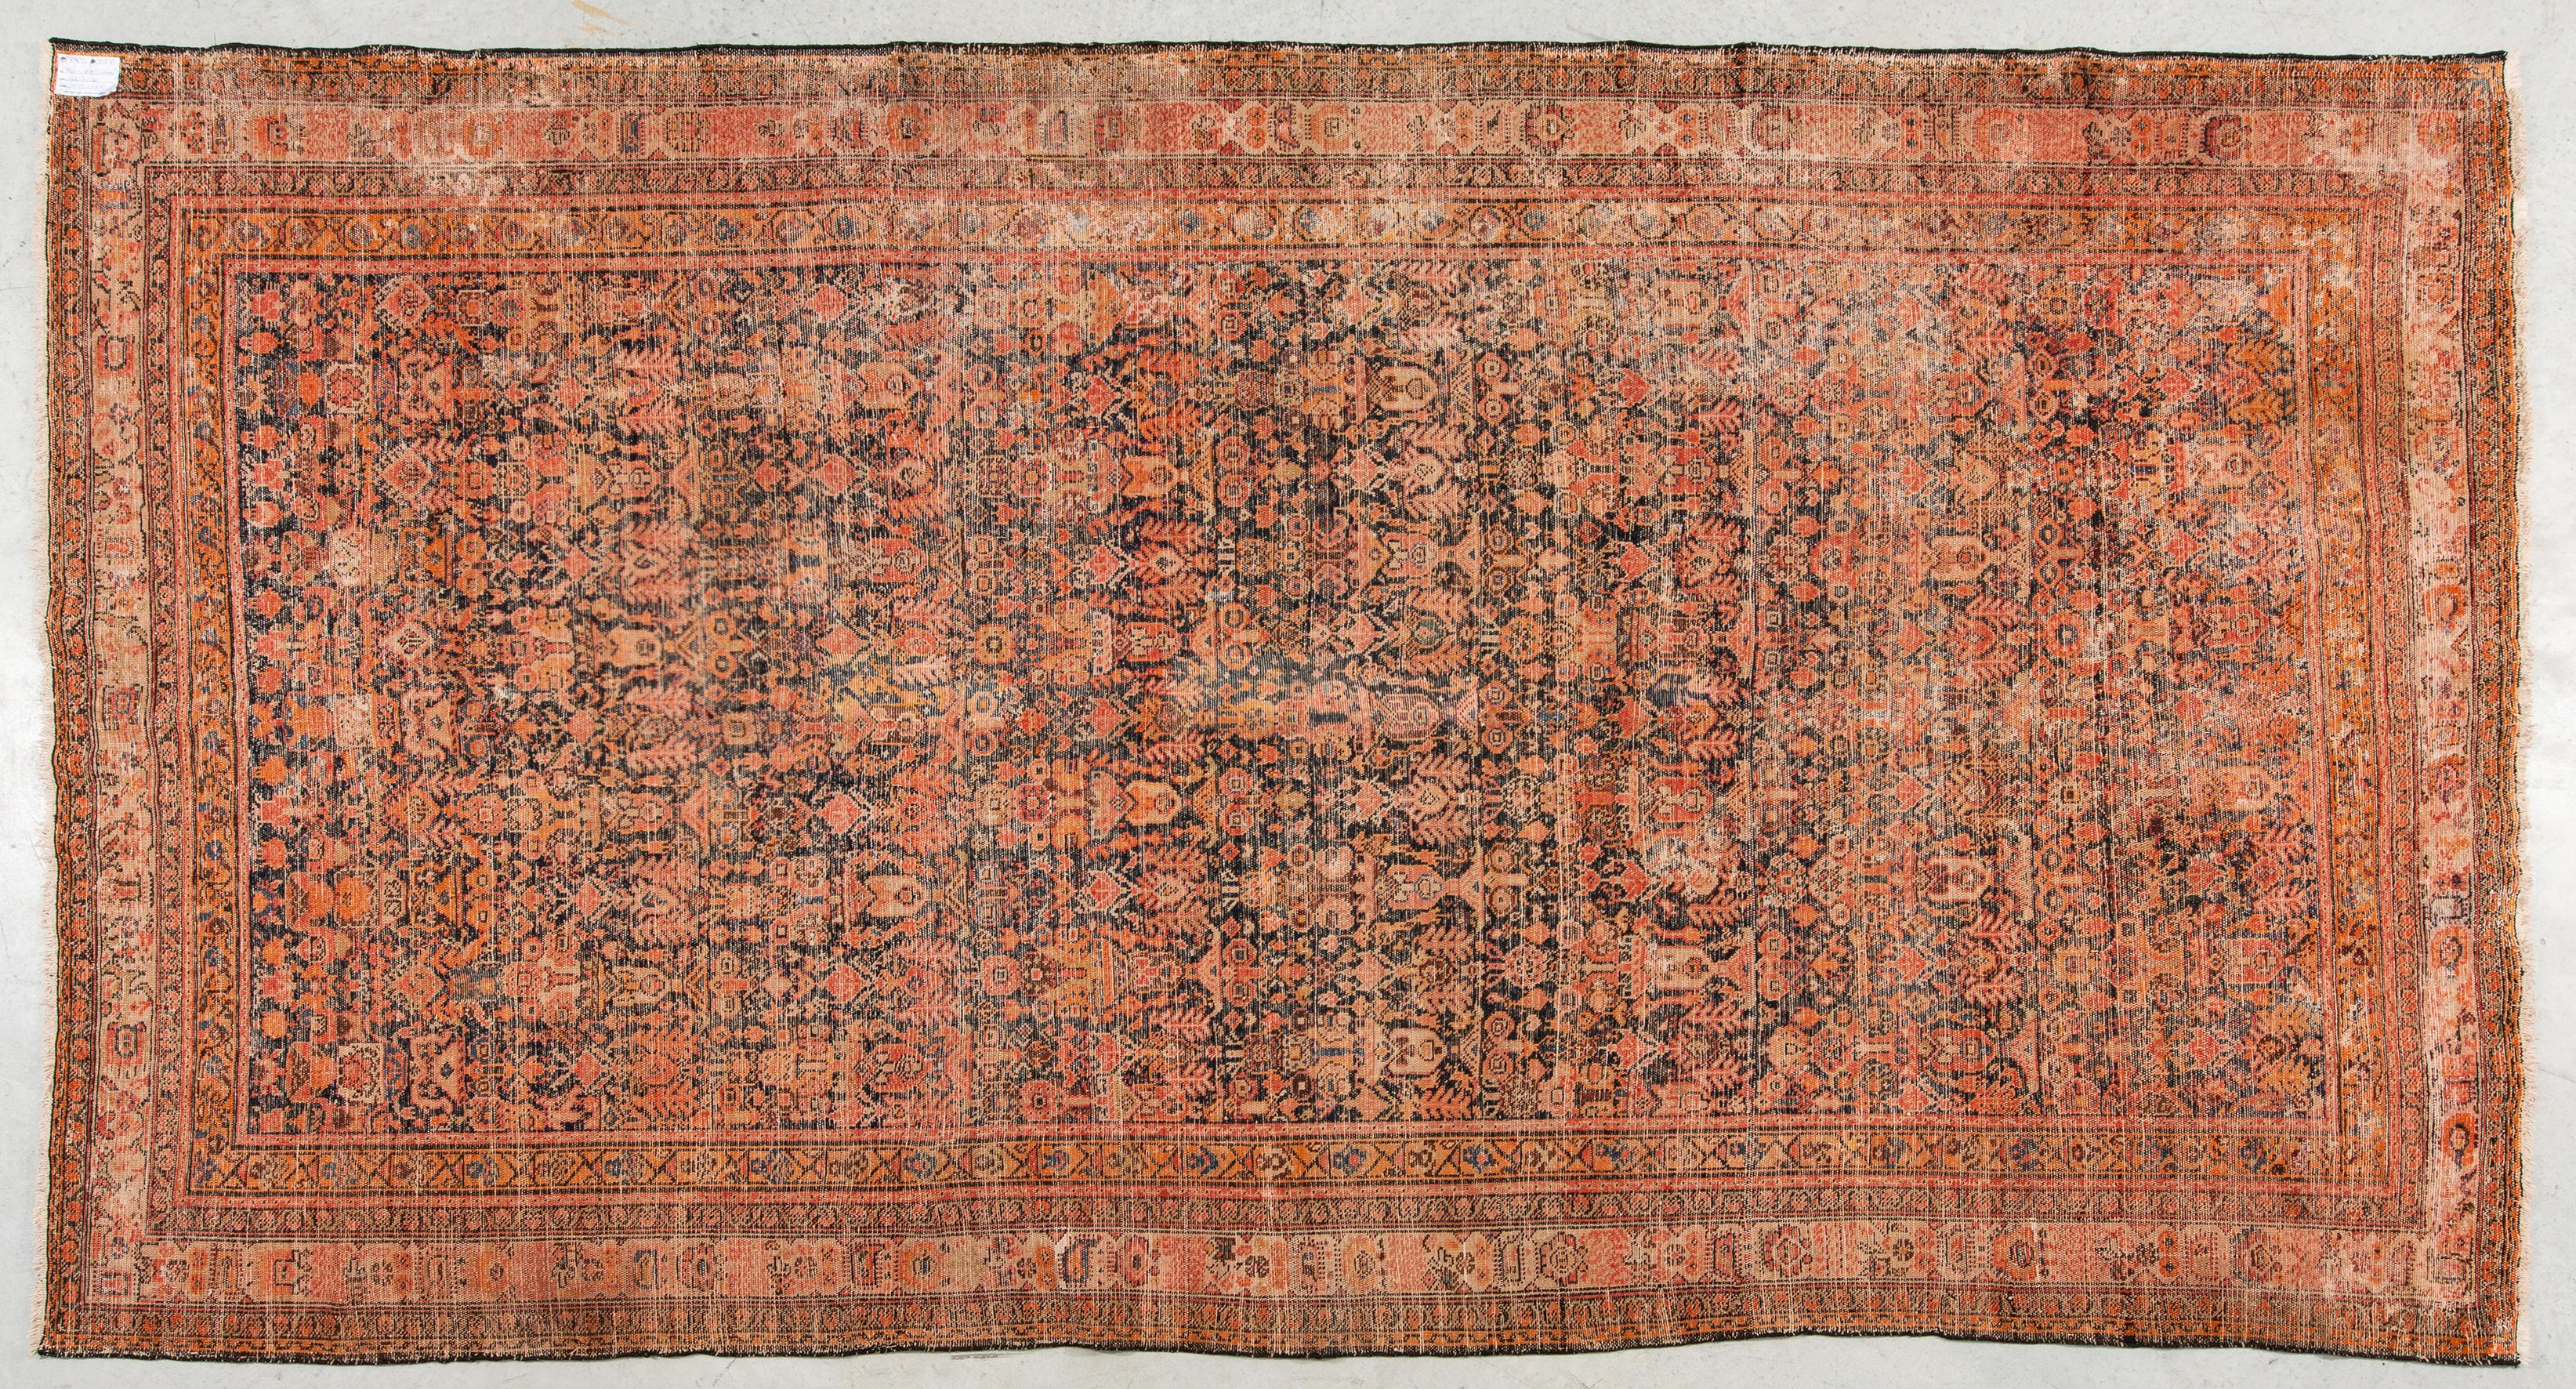 Other Antique Armenian Carpet For Sale